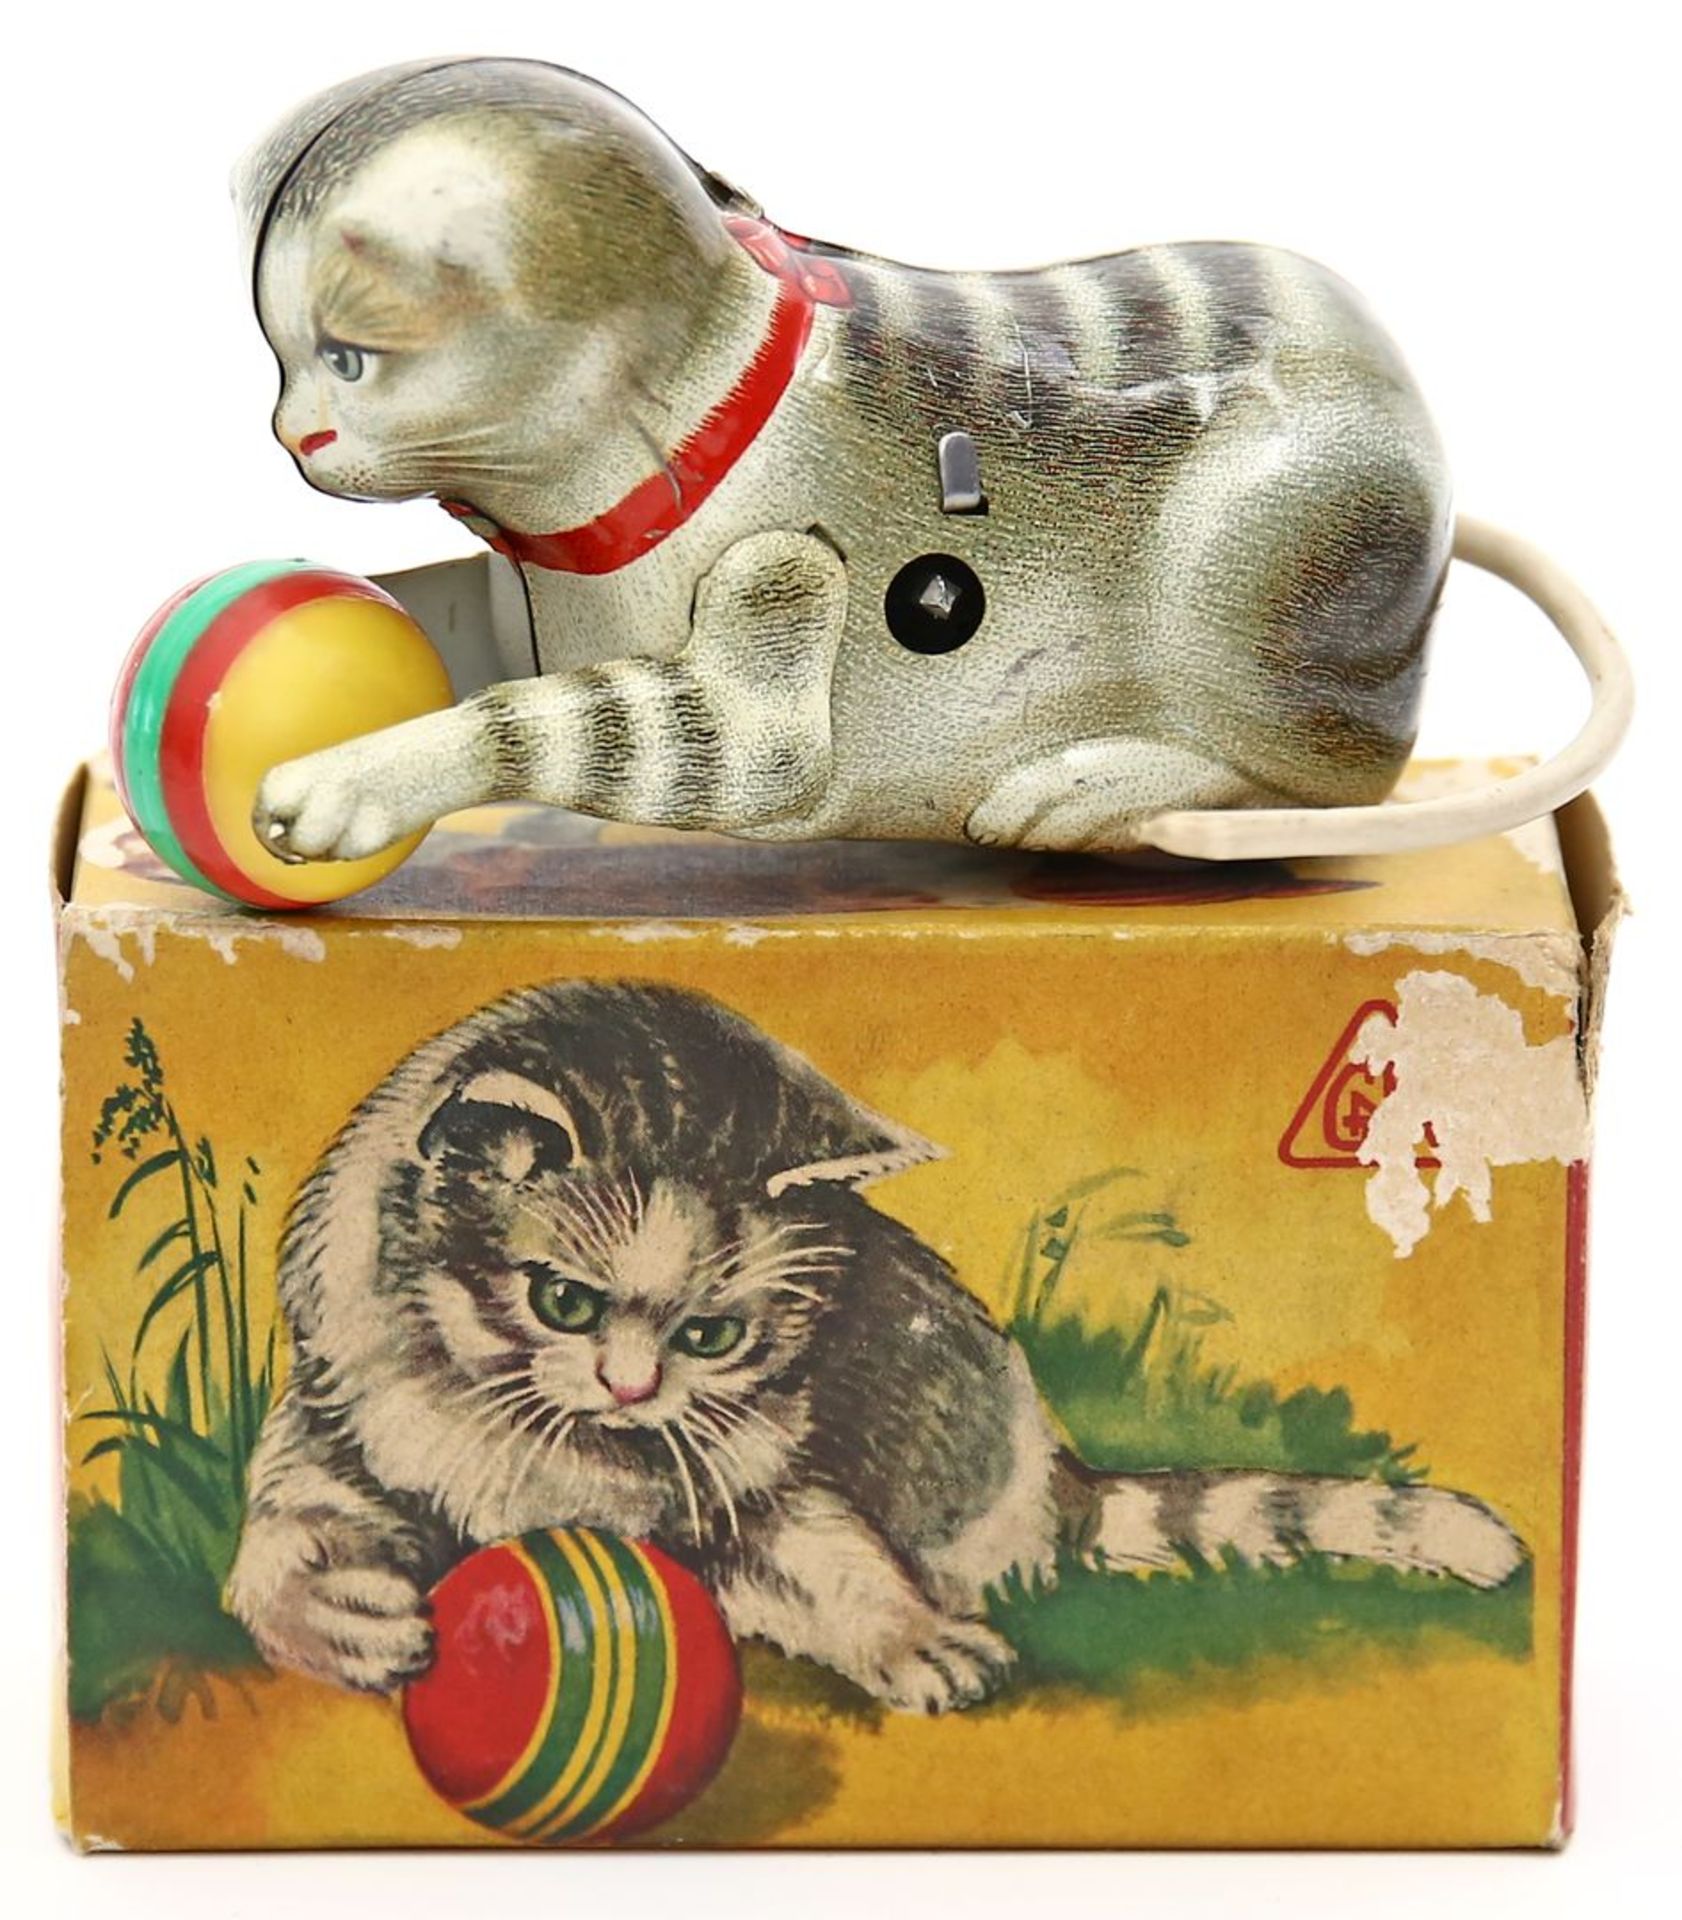 Blechspielzeug "Katze mit Ball", Köhler.